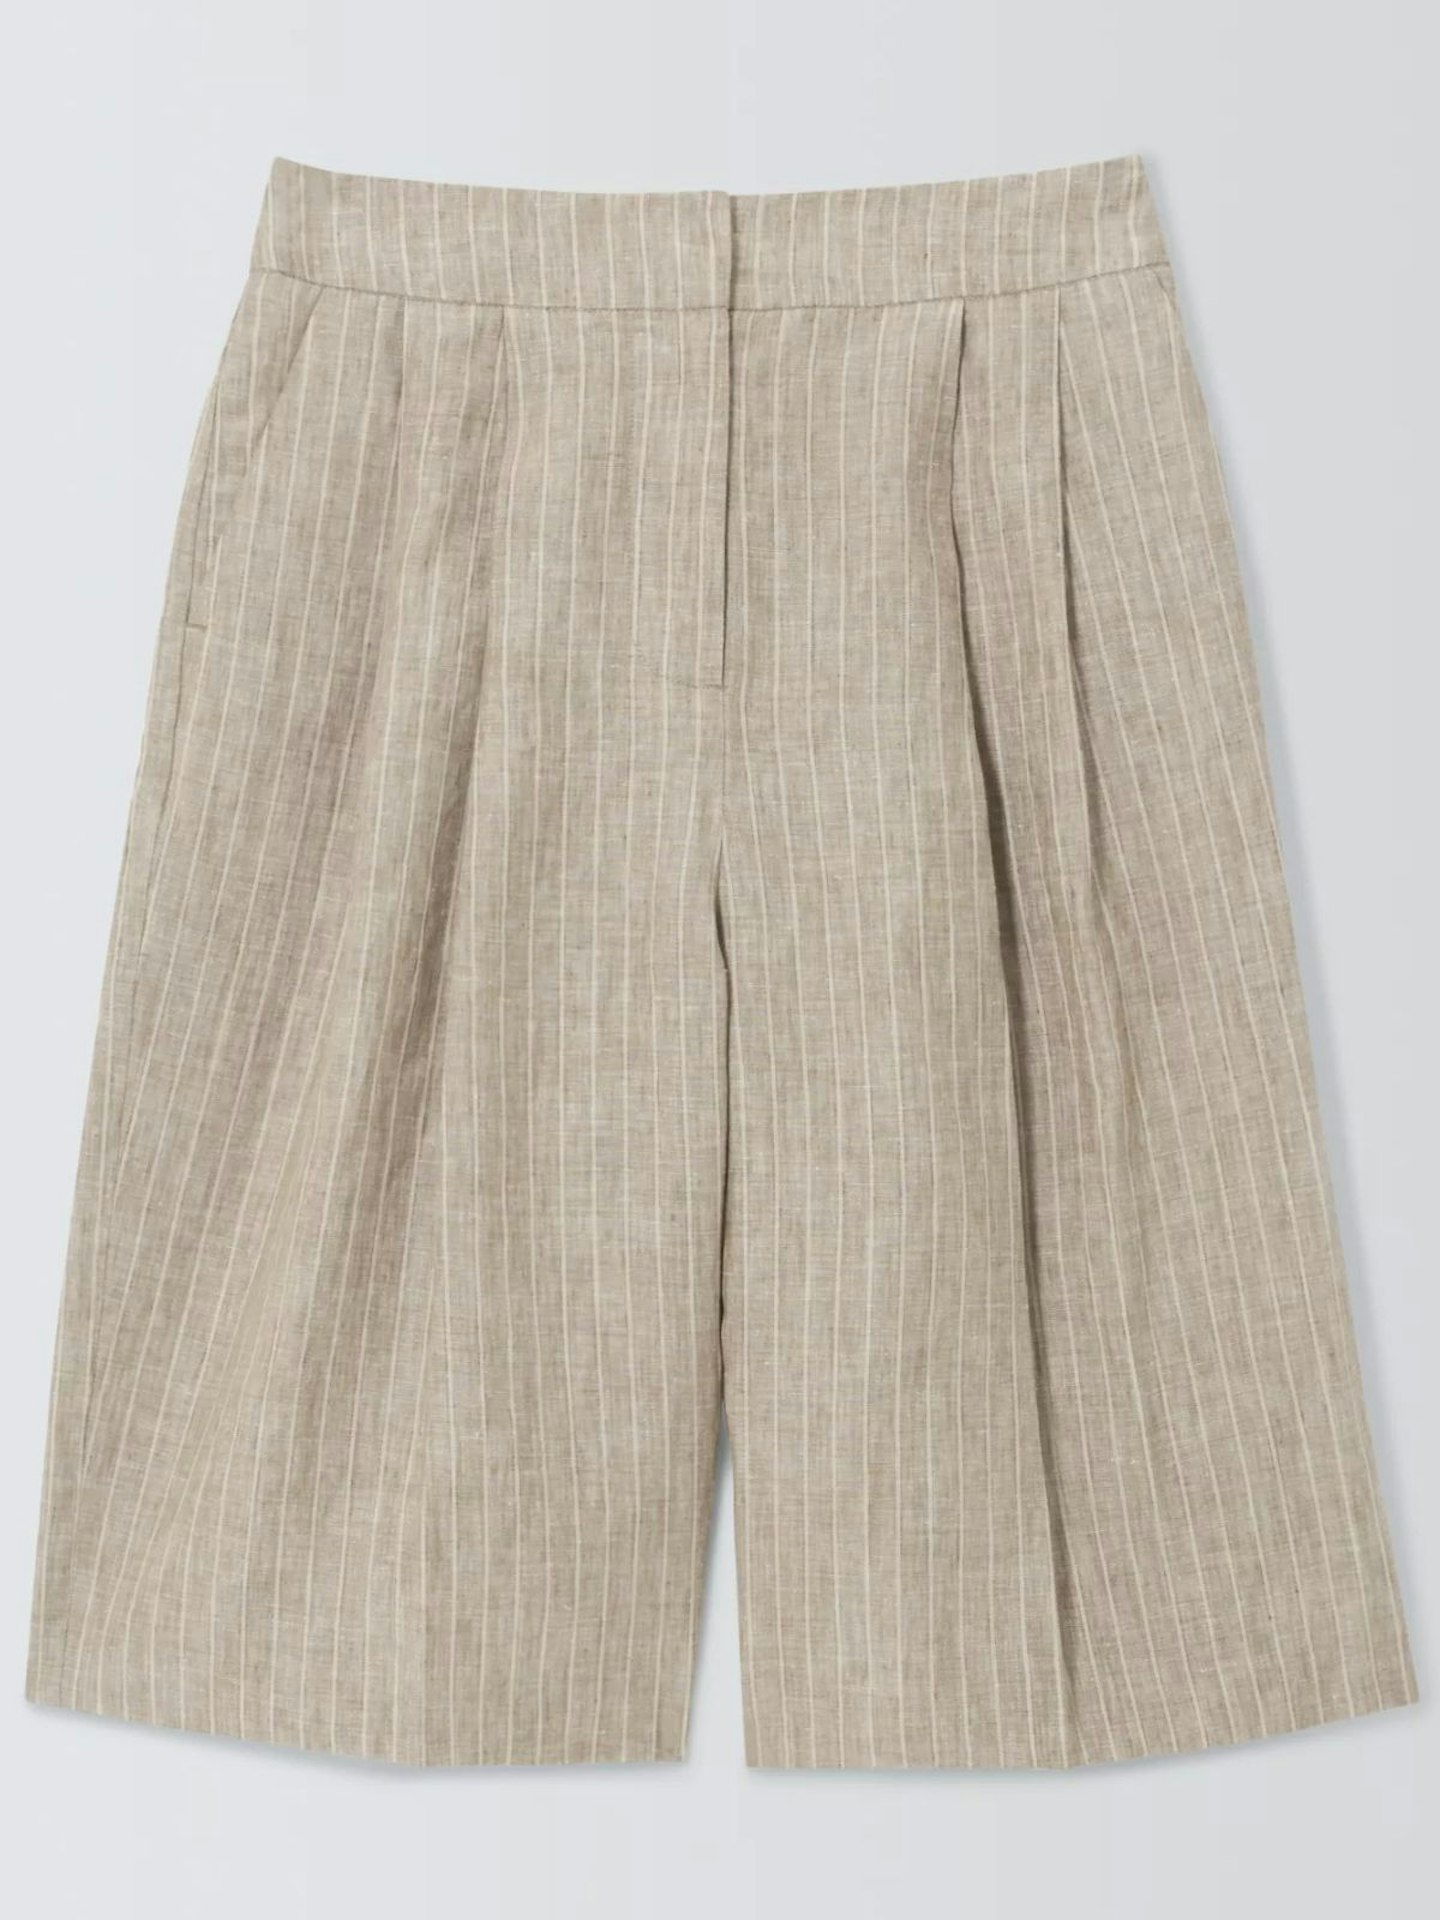 John Lewis Stripe Linen Shorts